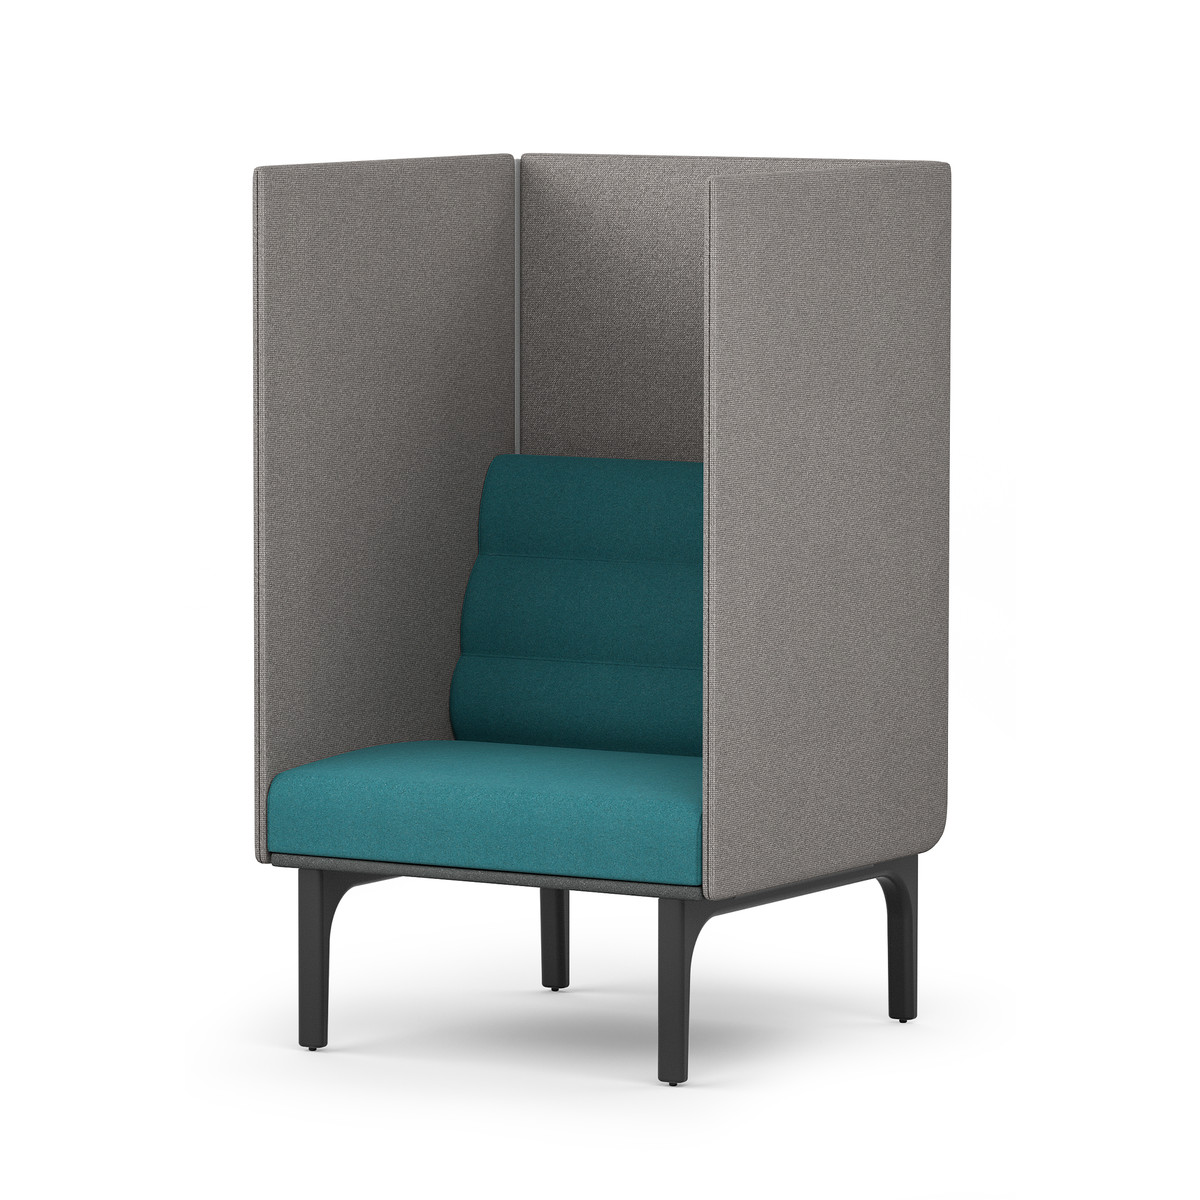 Acoustic Furniture